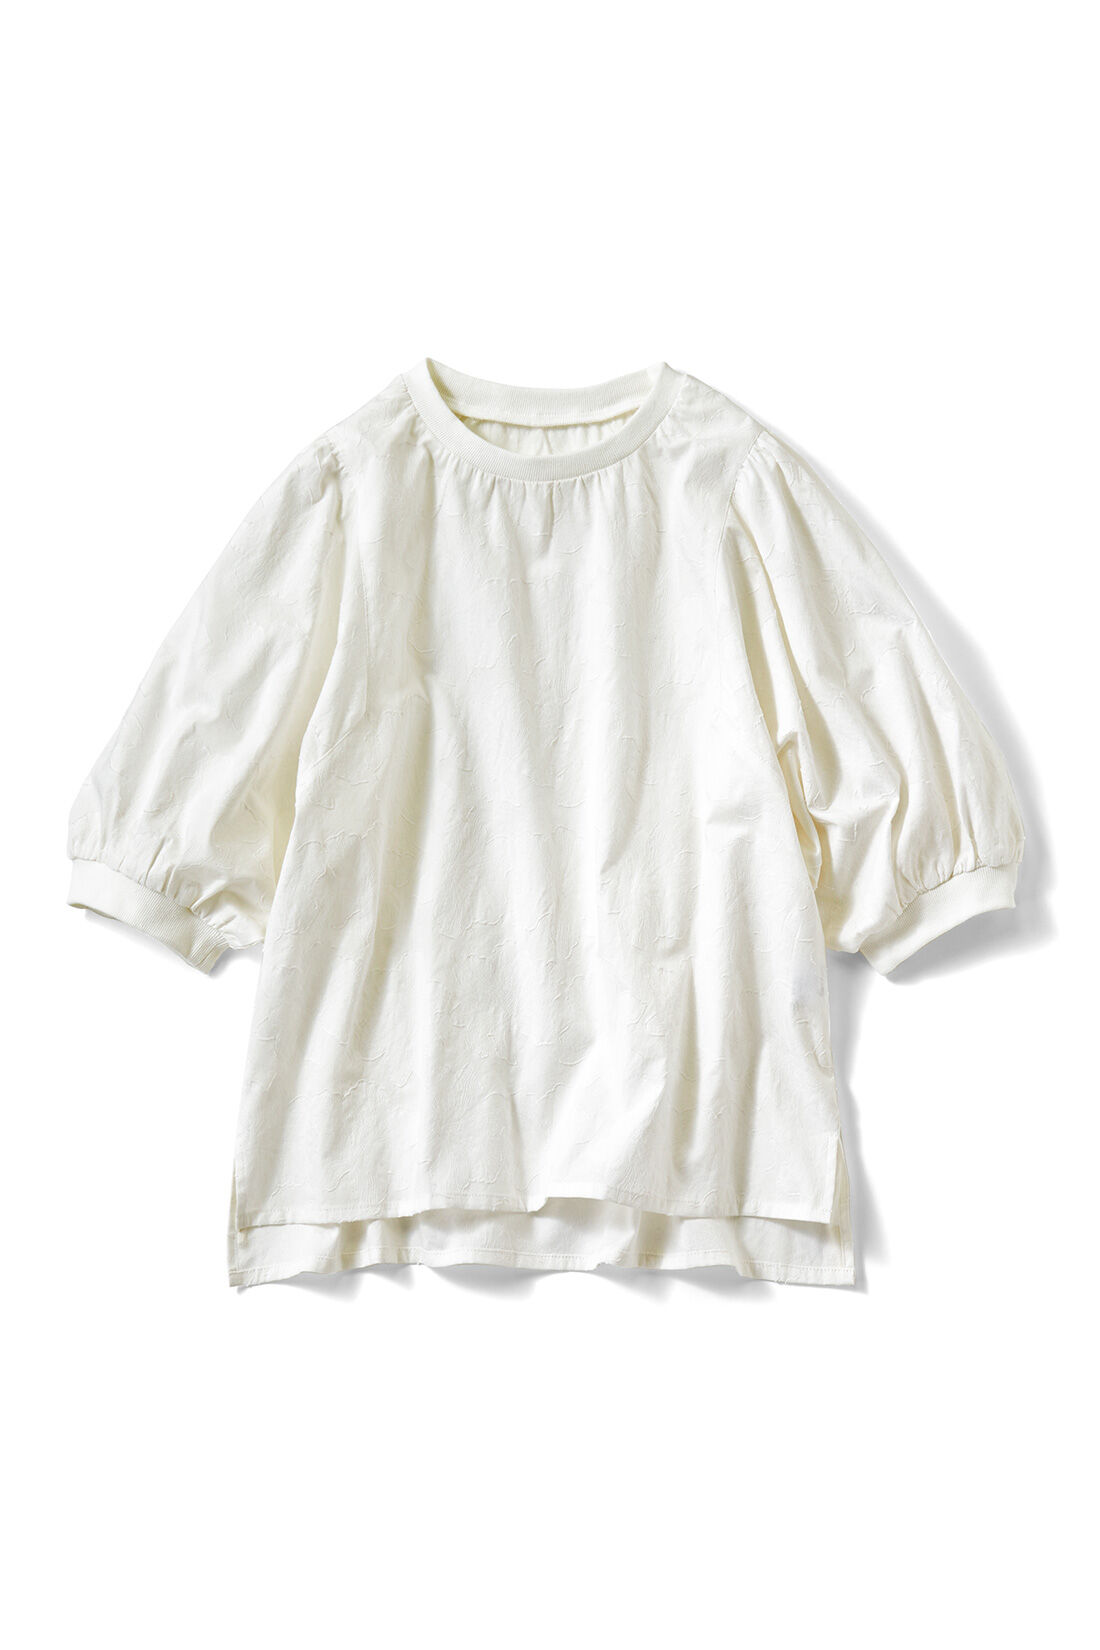 Real Stock|リブ イン コンフォート Tシャツ感覚で着られて上品見え 華やかコットンカットドビープルオーバー〈ホワイト〉|ホワイト